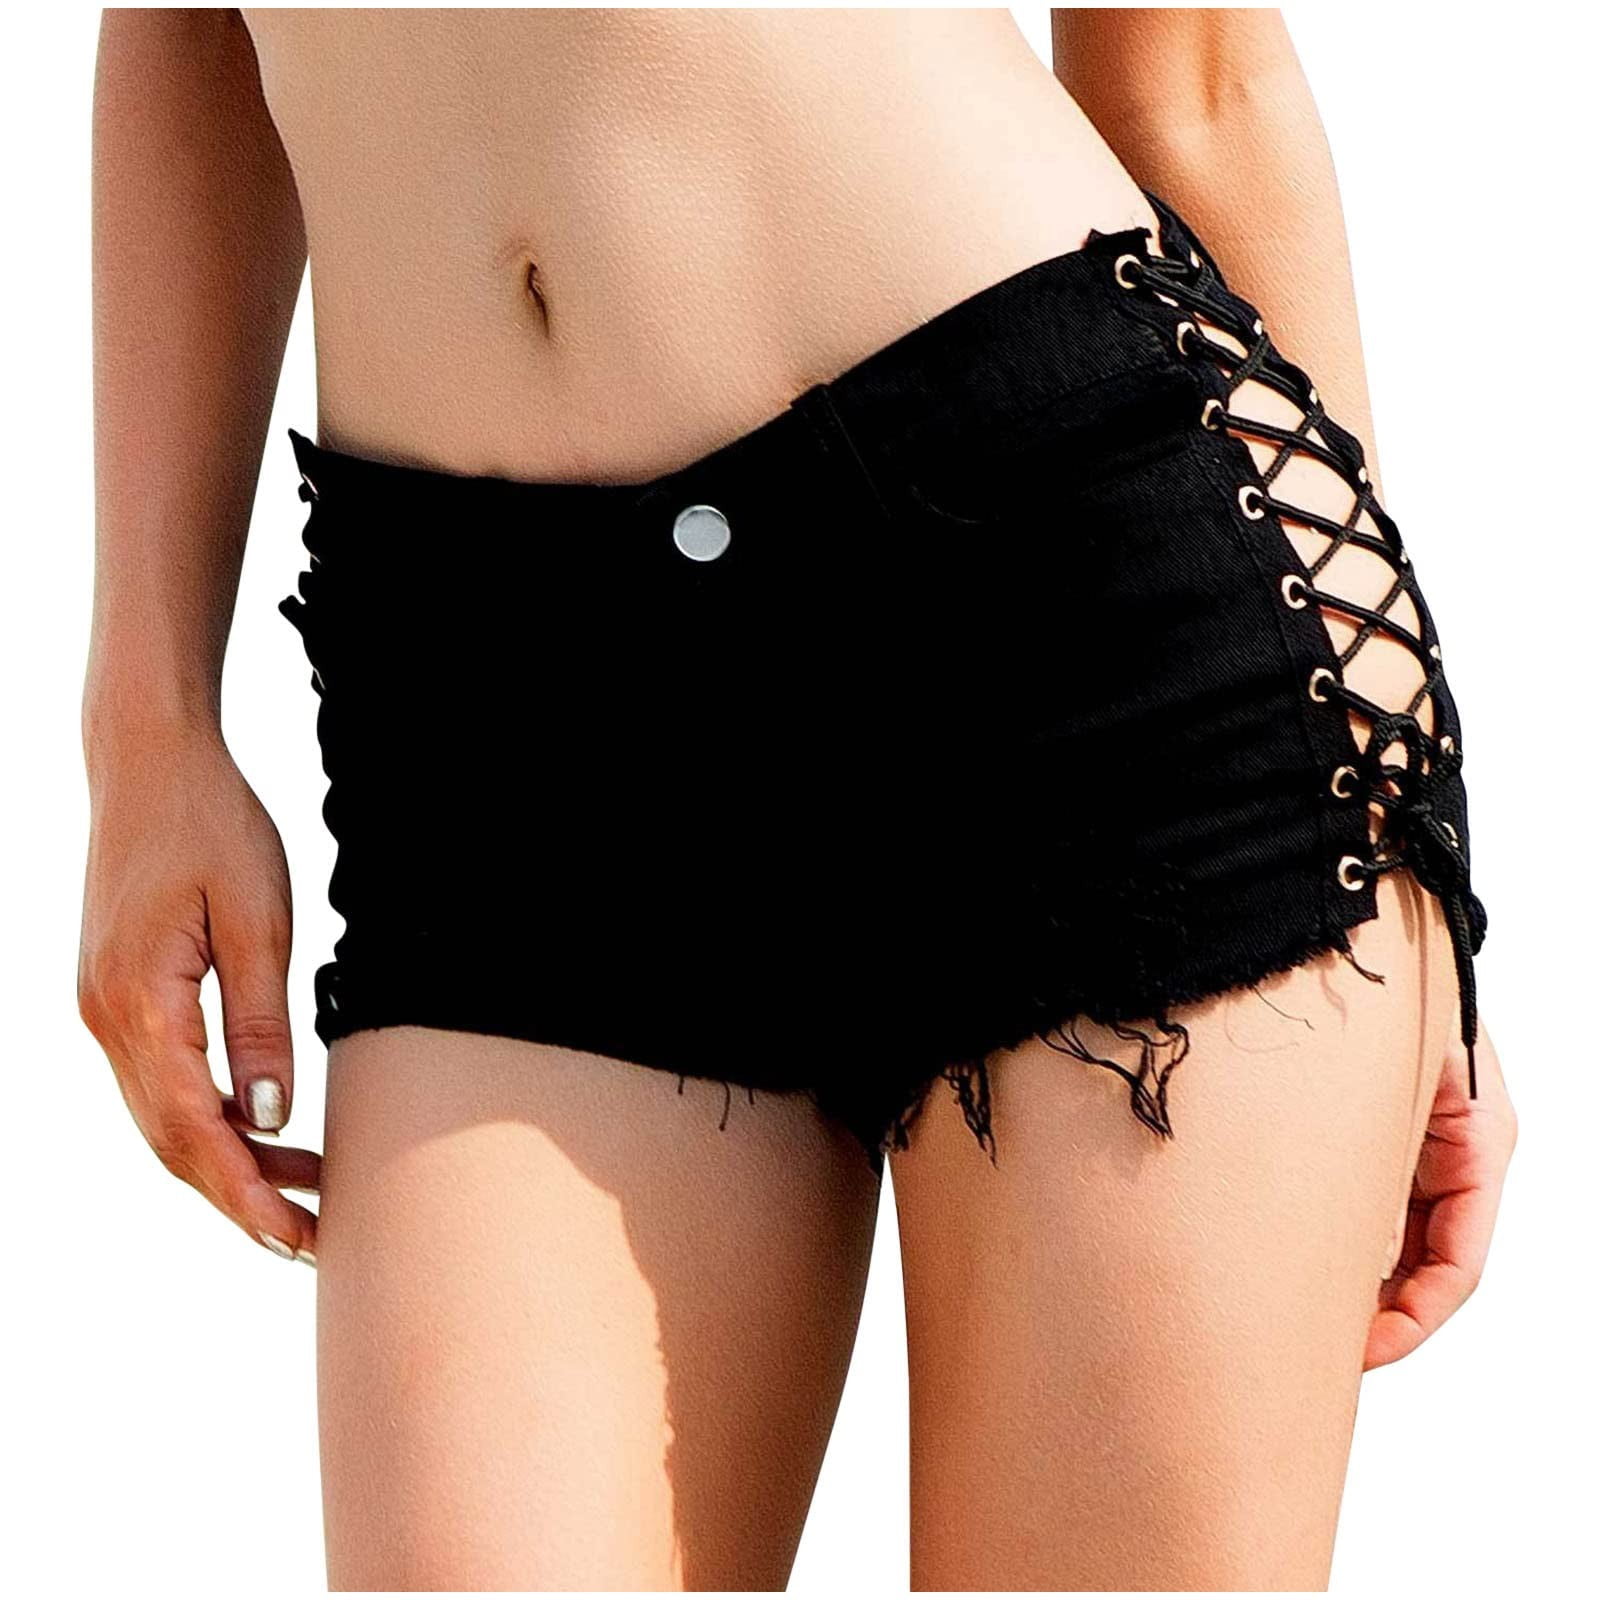 HHei K Women s Ripped Denim Shorts Sexy Low Waist Hollow Mini Hot Pants womens nbsp shorts 6fbf2974 8482 465d a004 34a9015a3c7d.dac06f7df47b6ac4bc05d7c0d3f10672